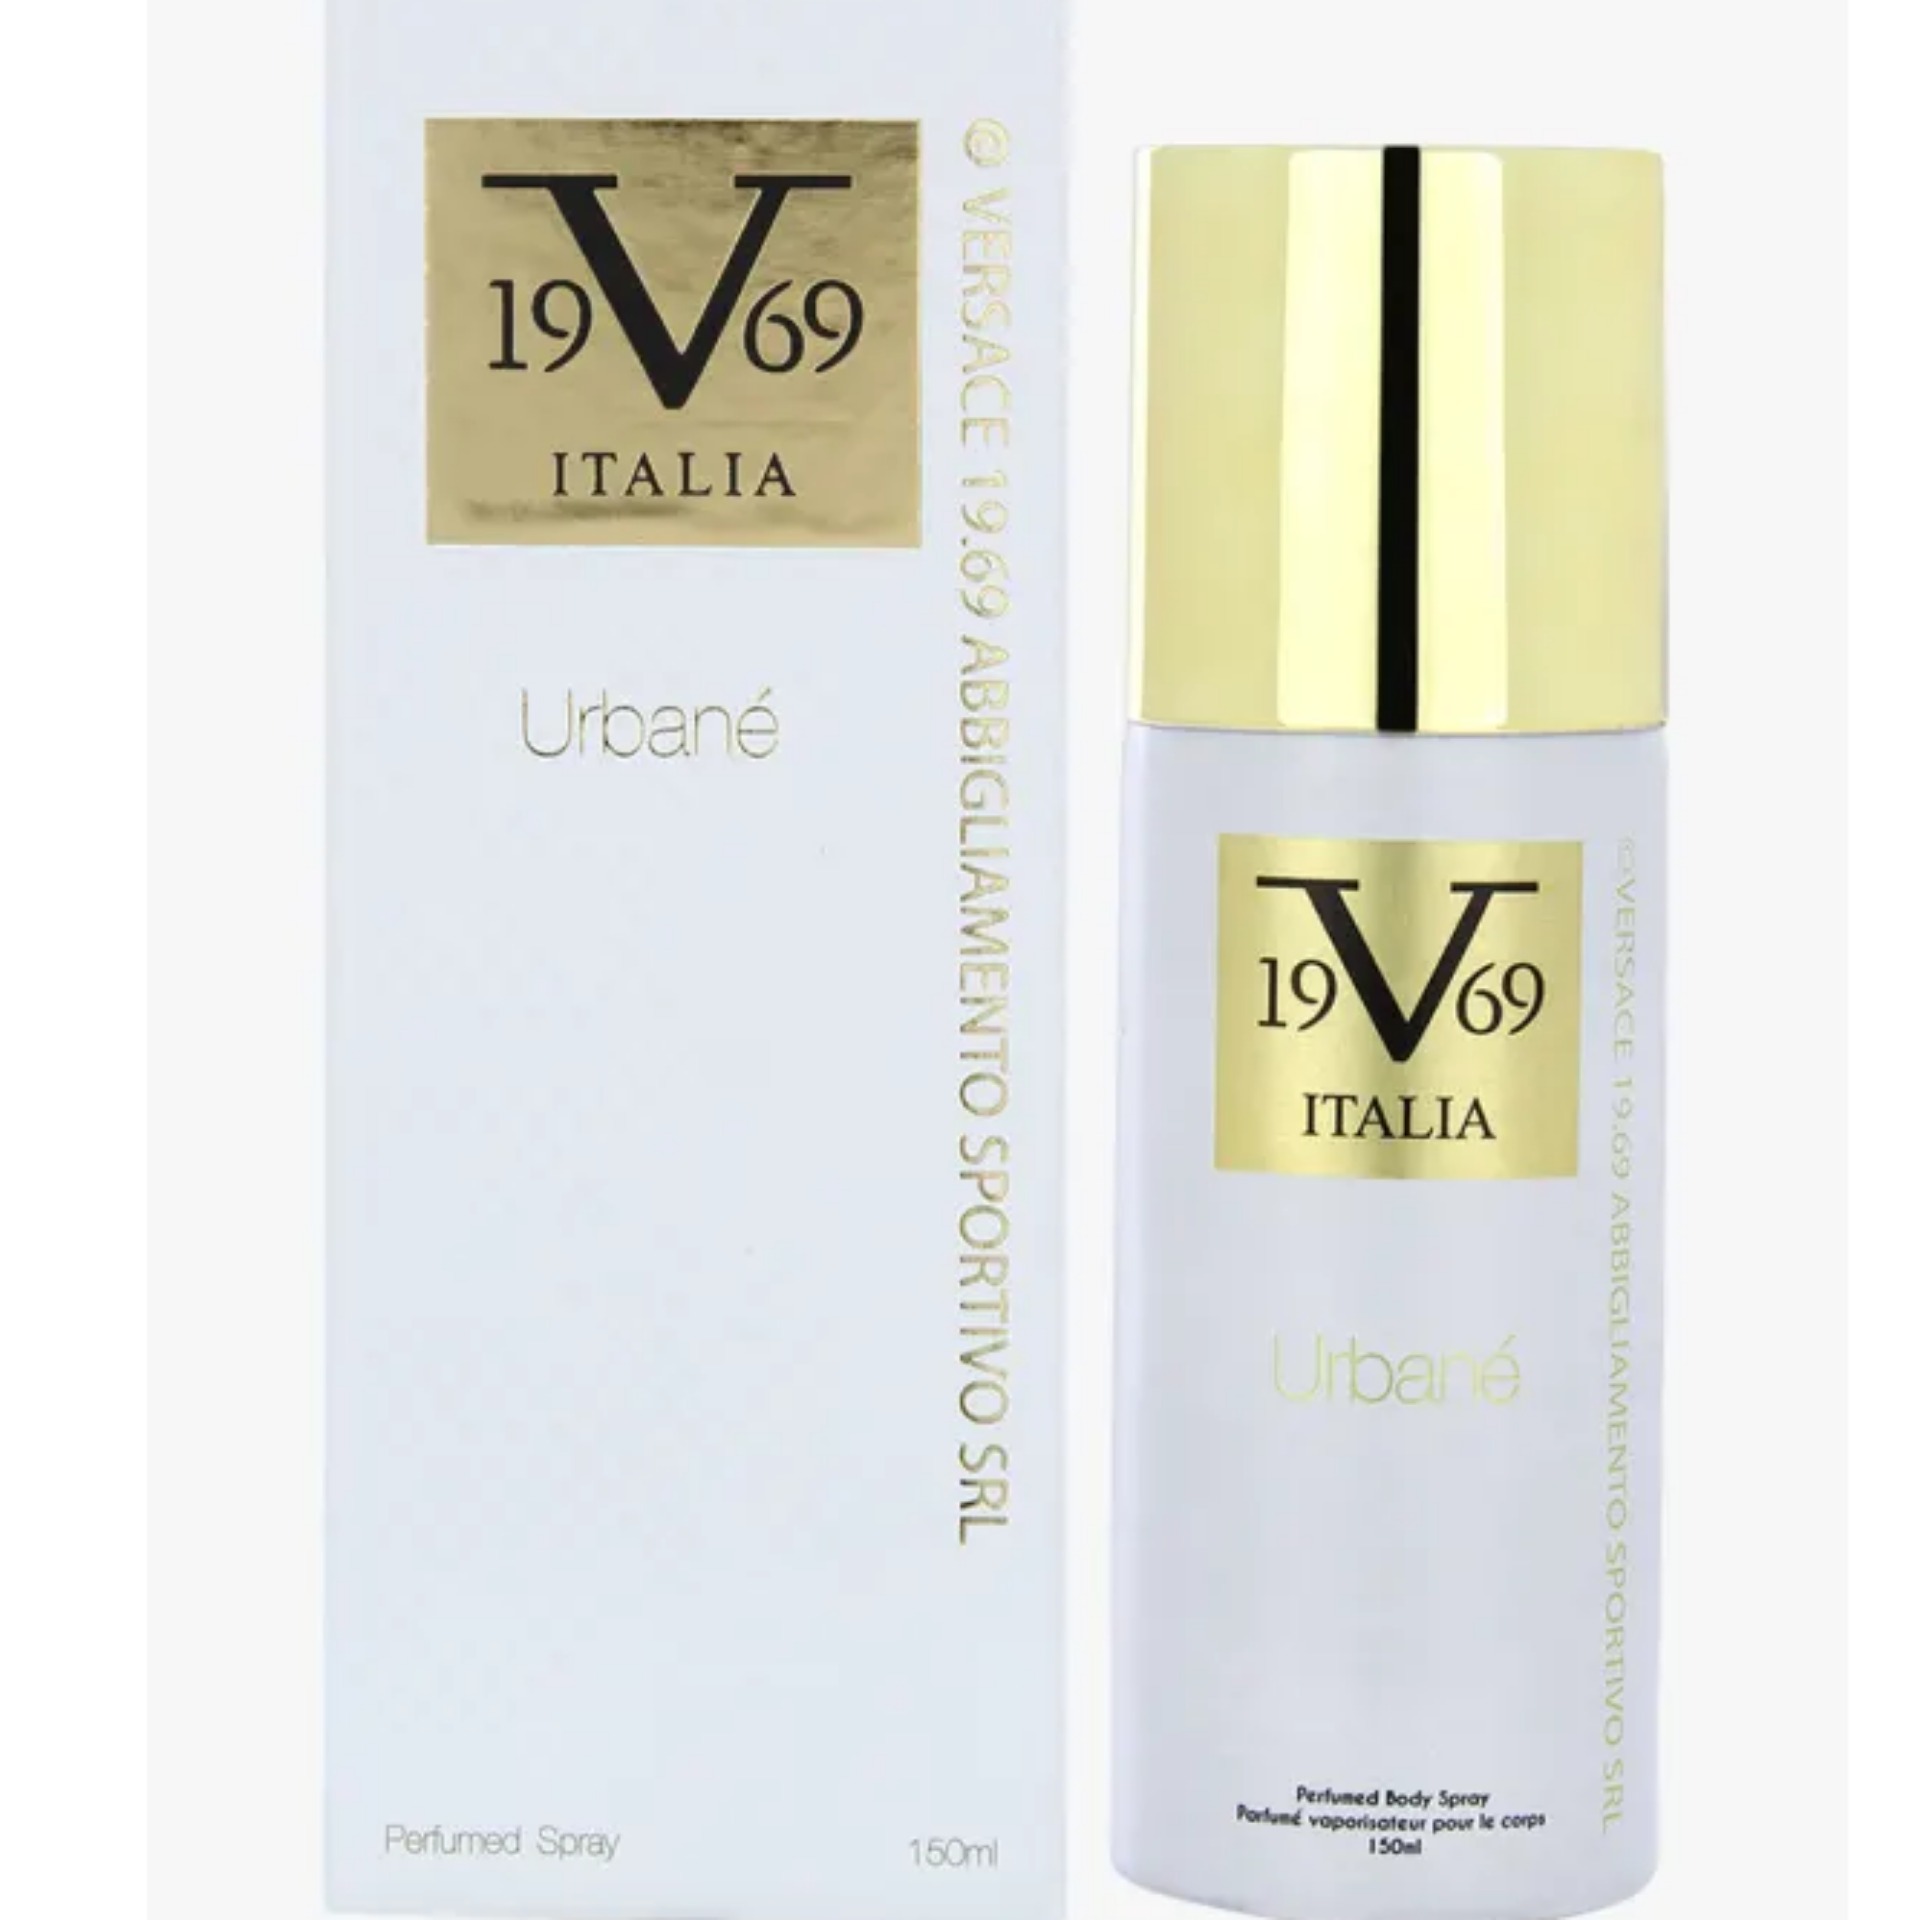 versace 19.69 italia urbane perfumed spray review